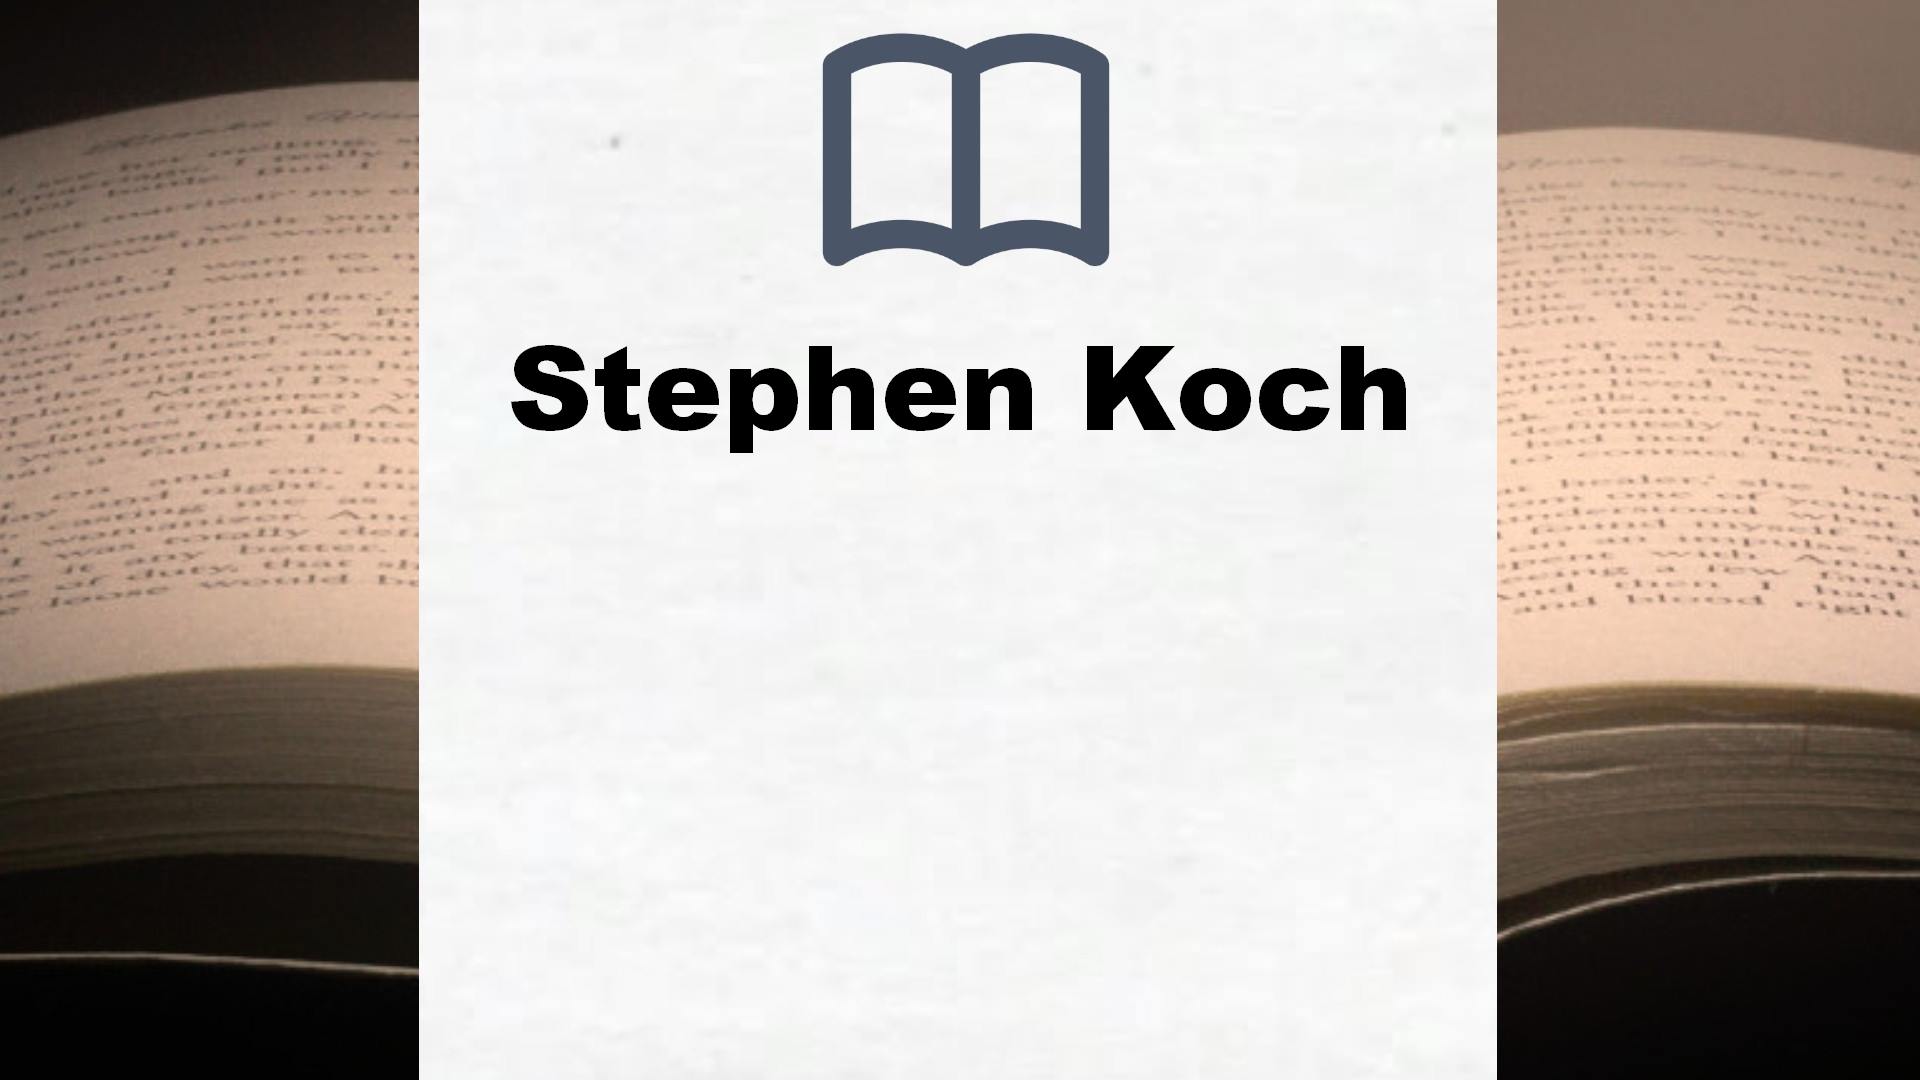 Libros Stephen Koch